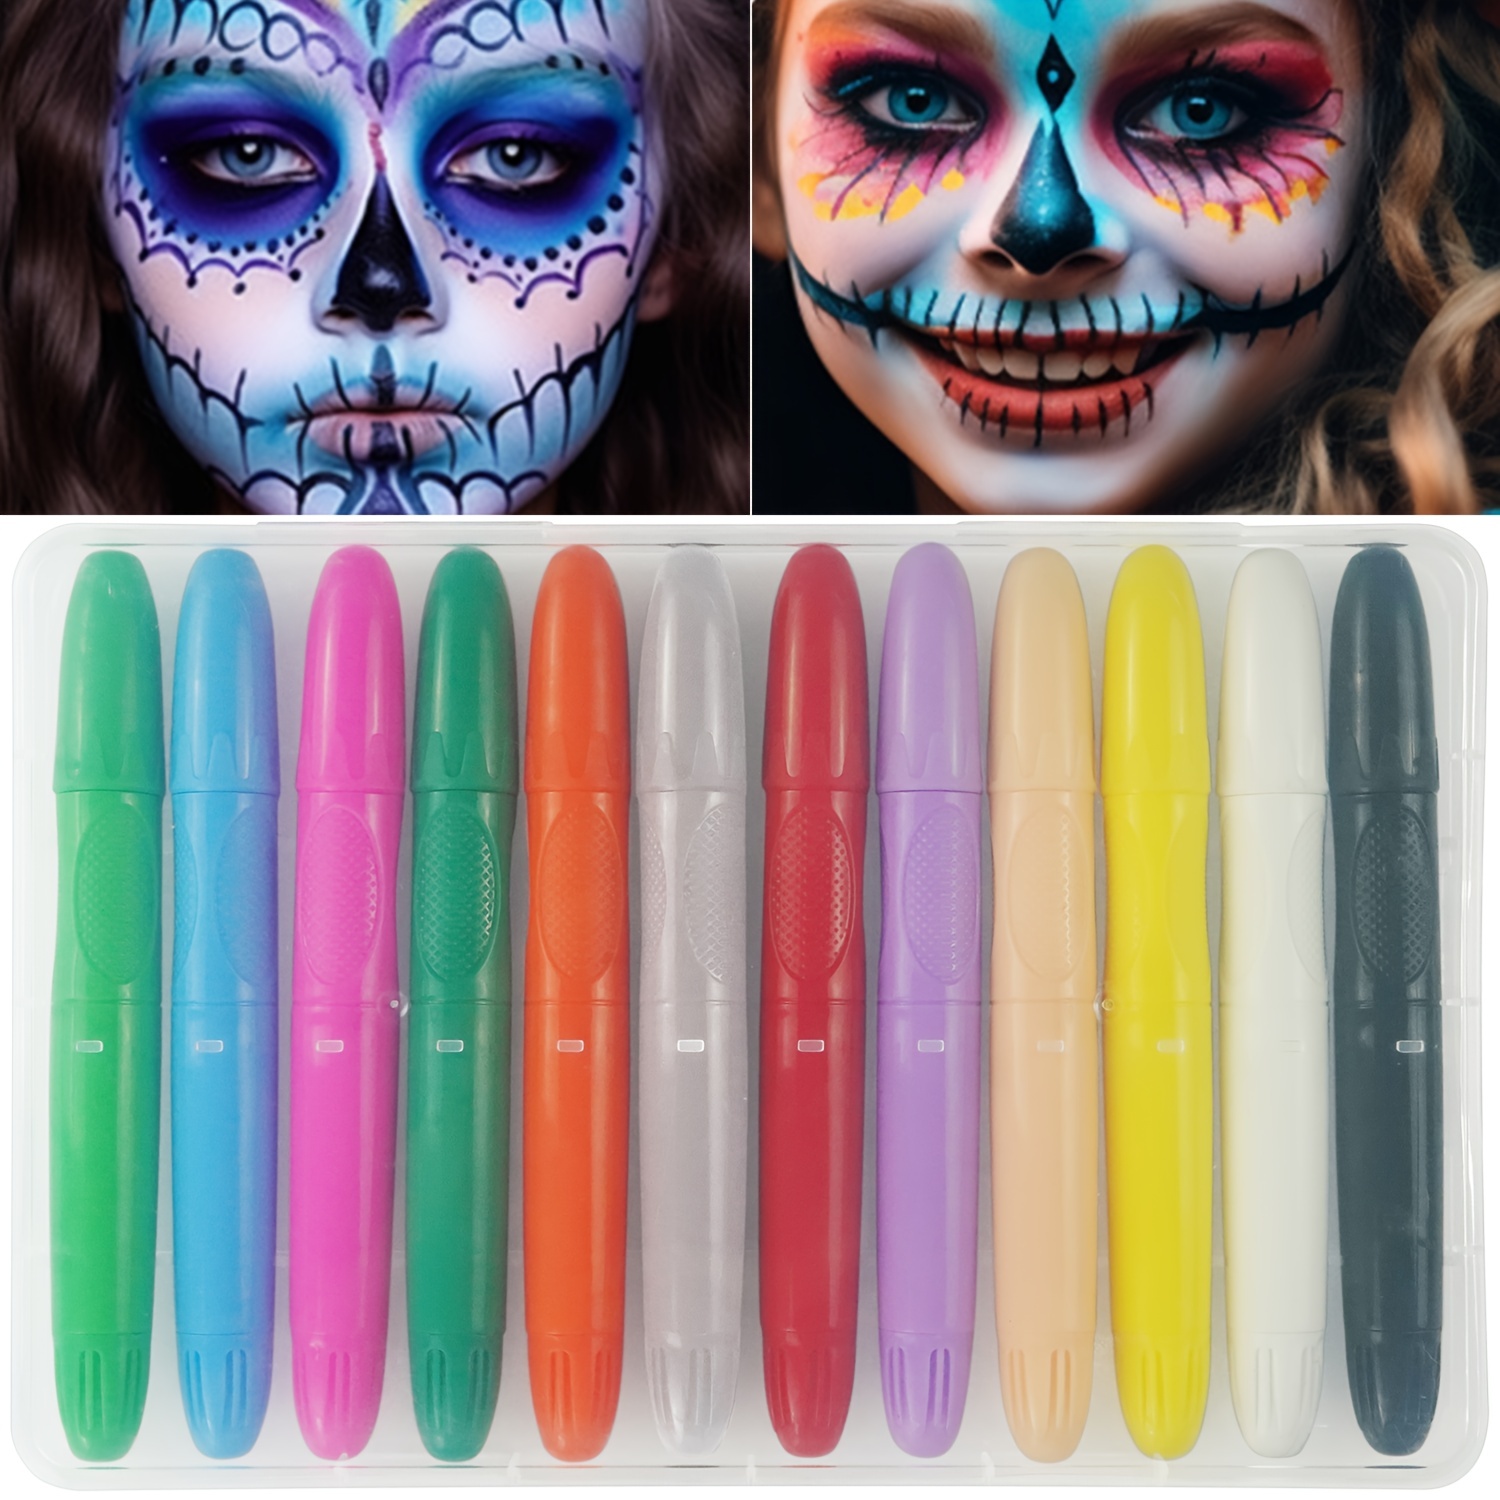 1/2PCS Halloween Party Face Painting Kit 12 Color Face Makeup Body